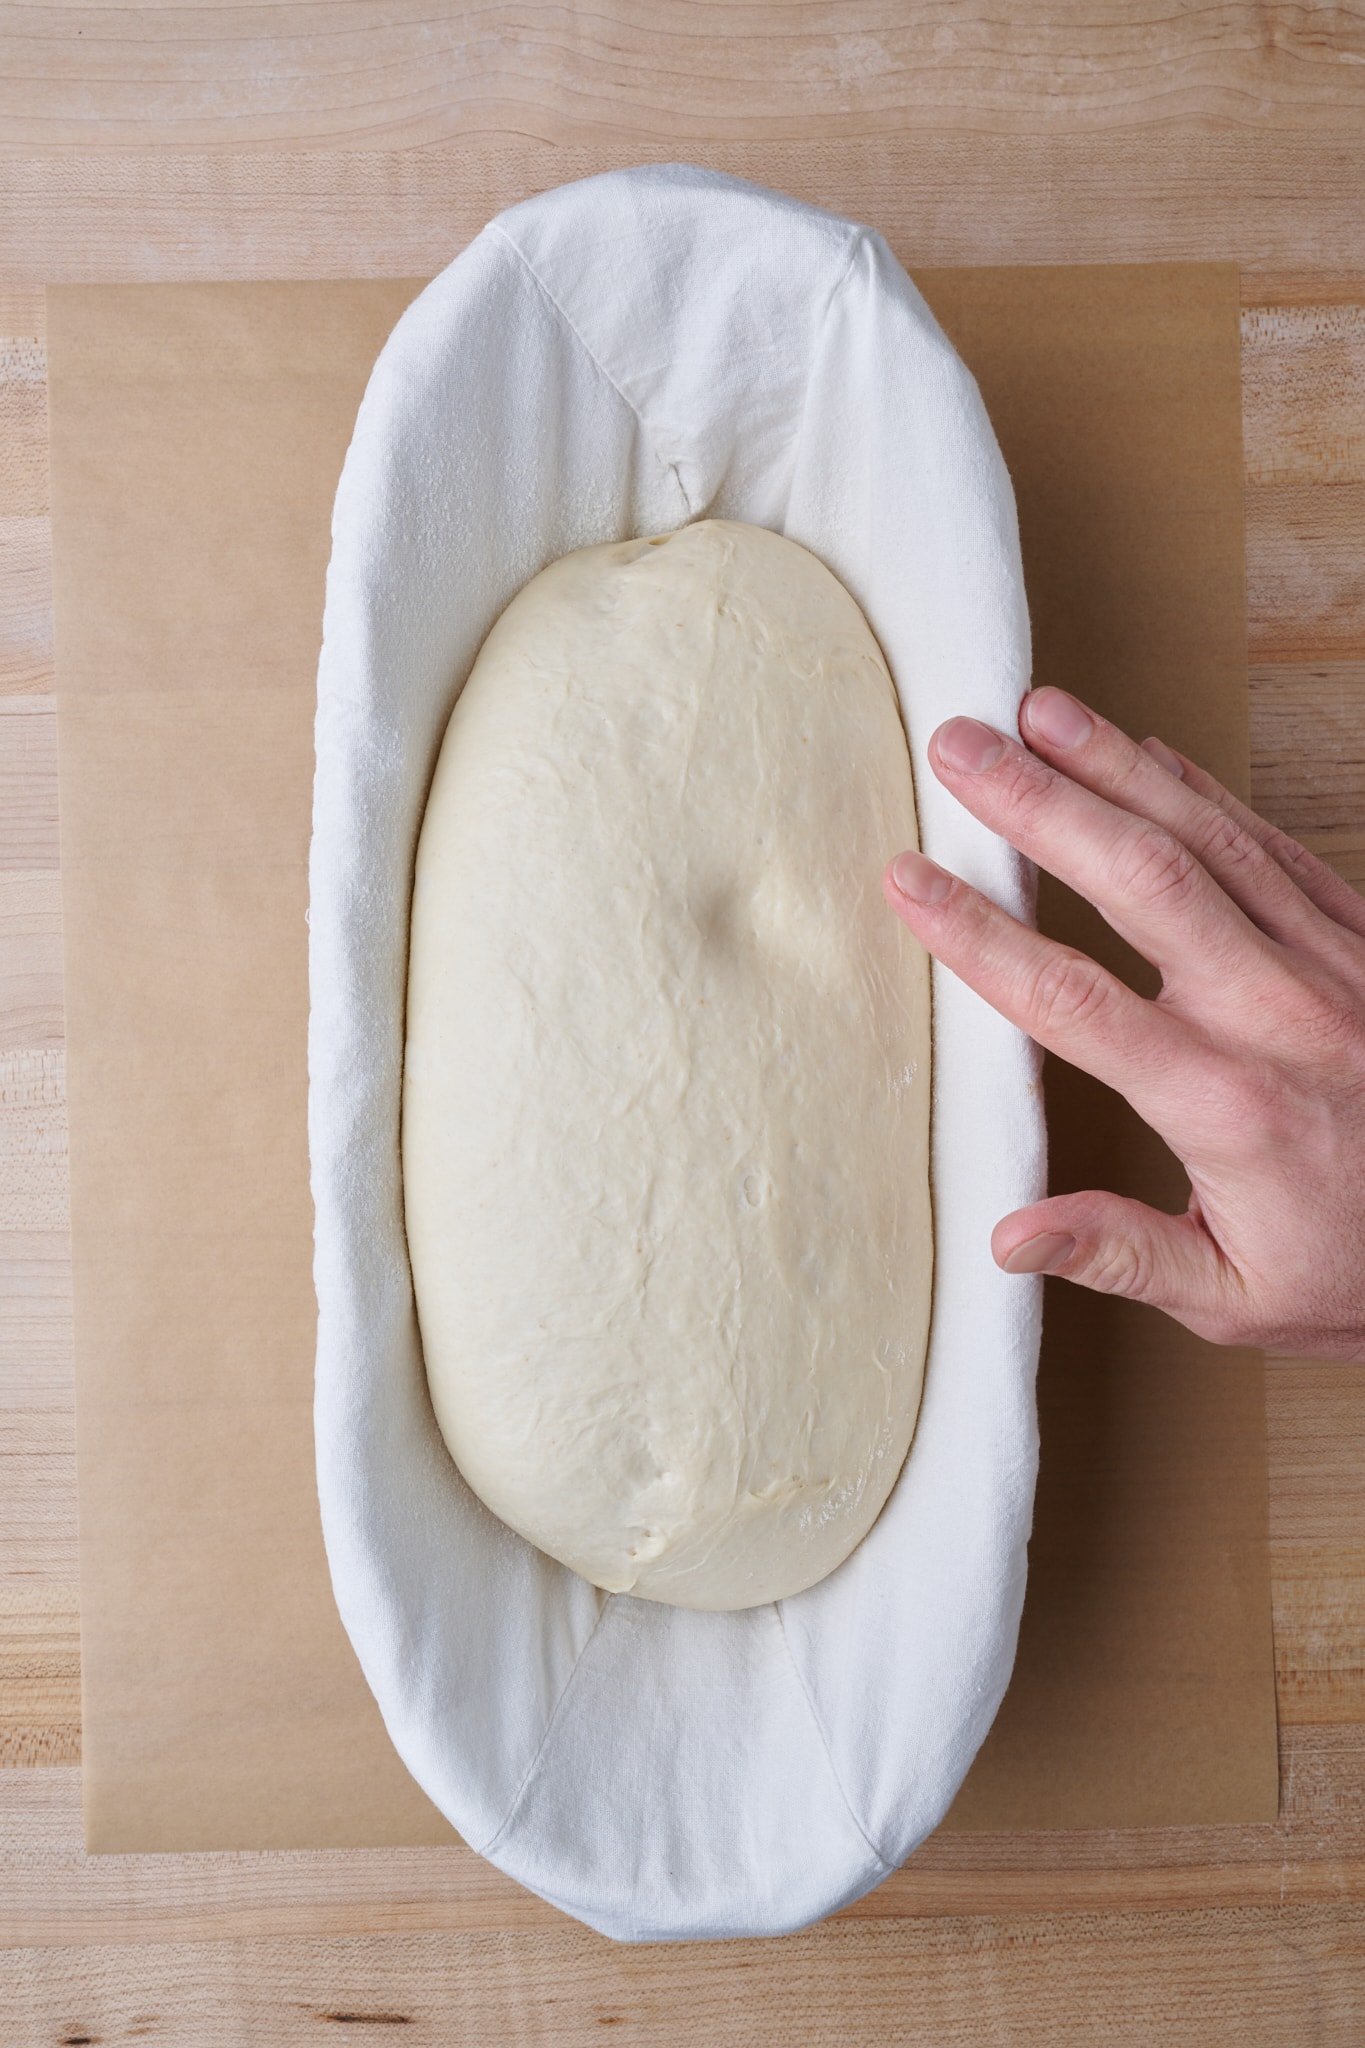 Dough poke test: overproofed dough